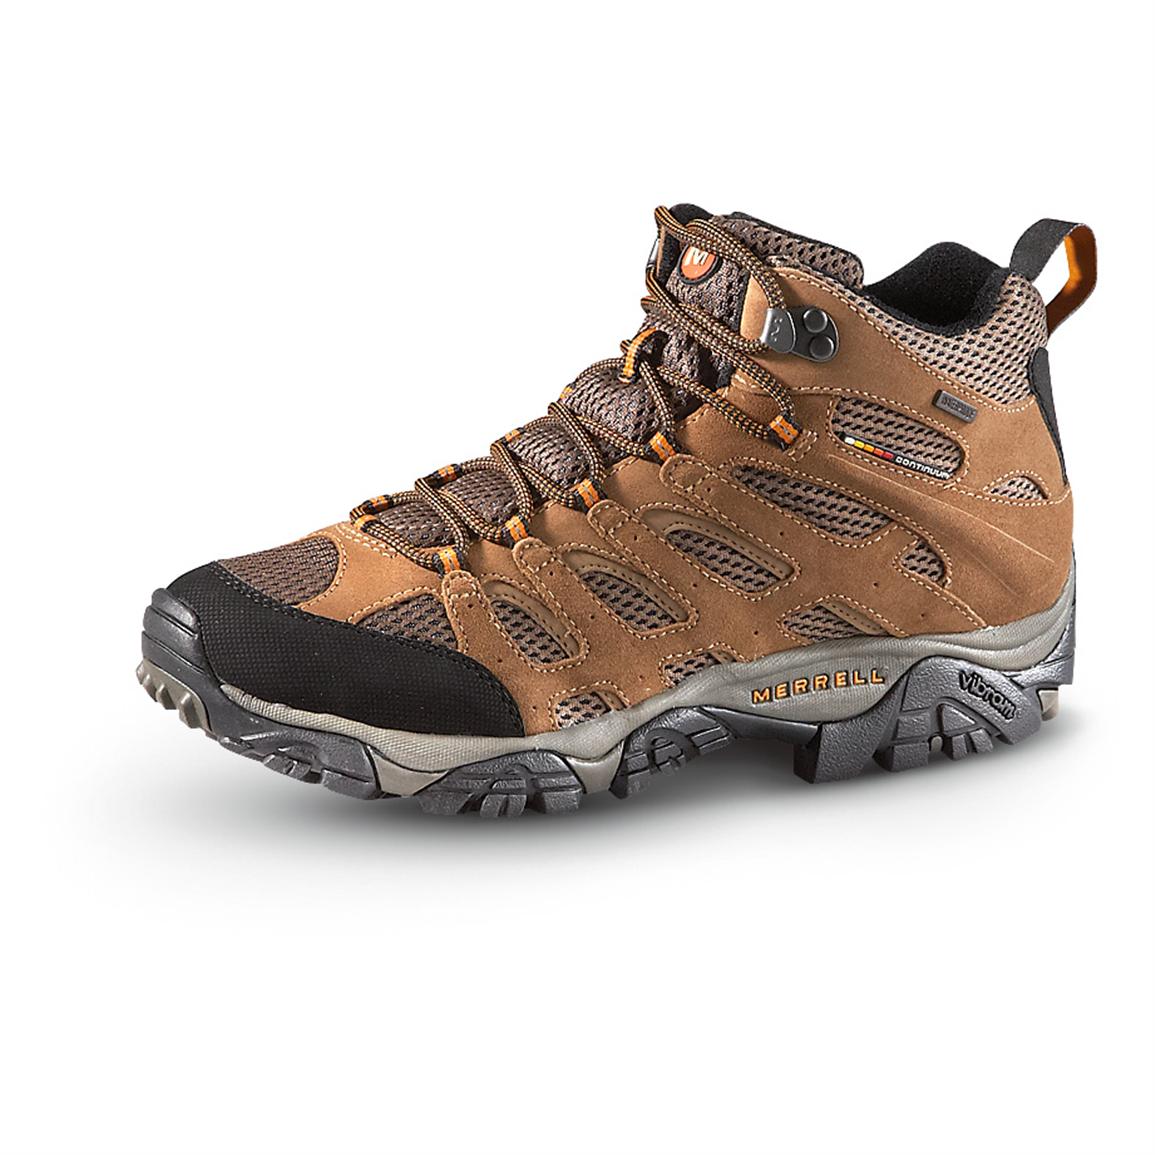 Merrell Men's Waterproof Moab Mid Hiking Shoes, Earth - 192504, Hiking